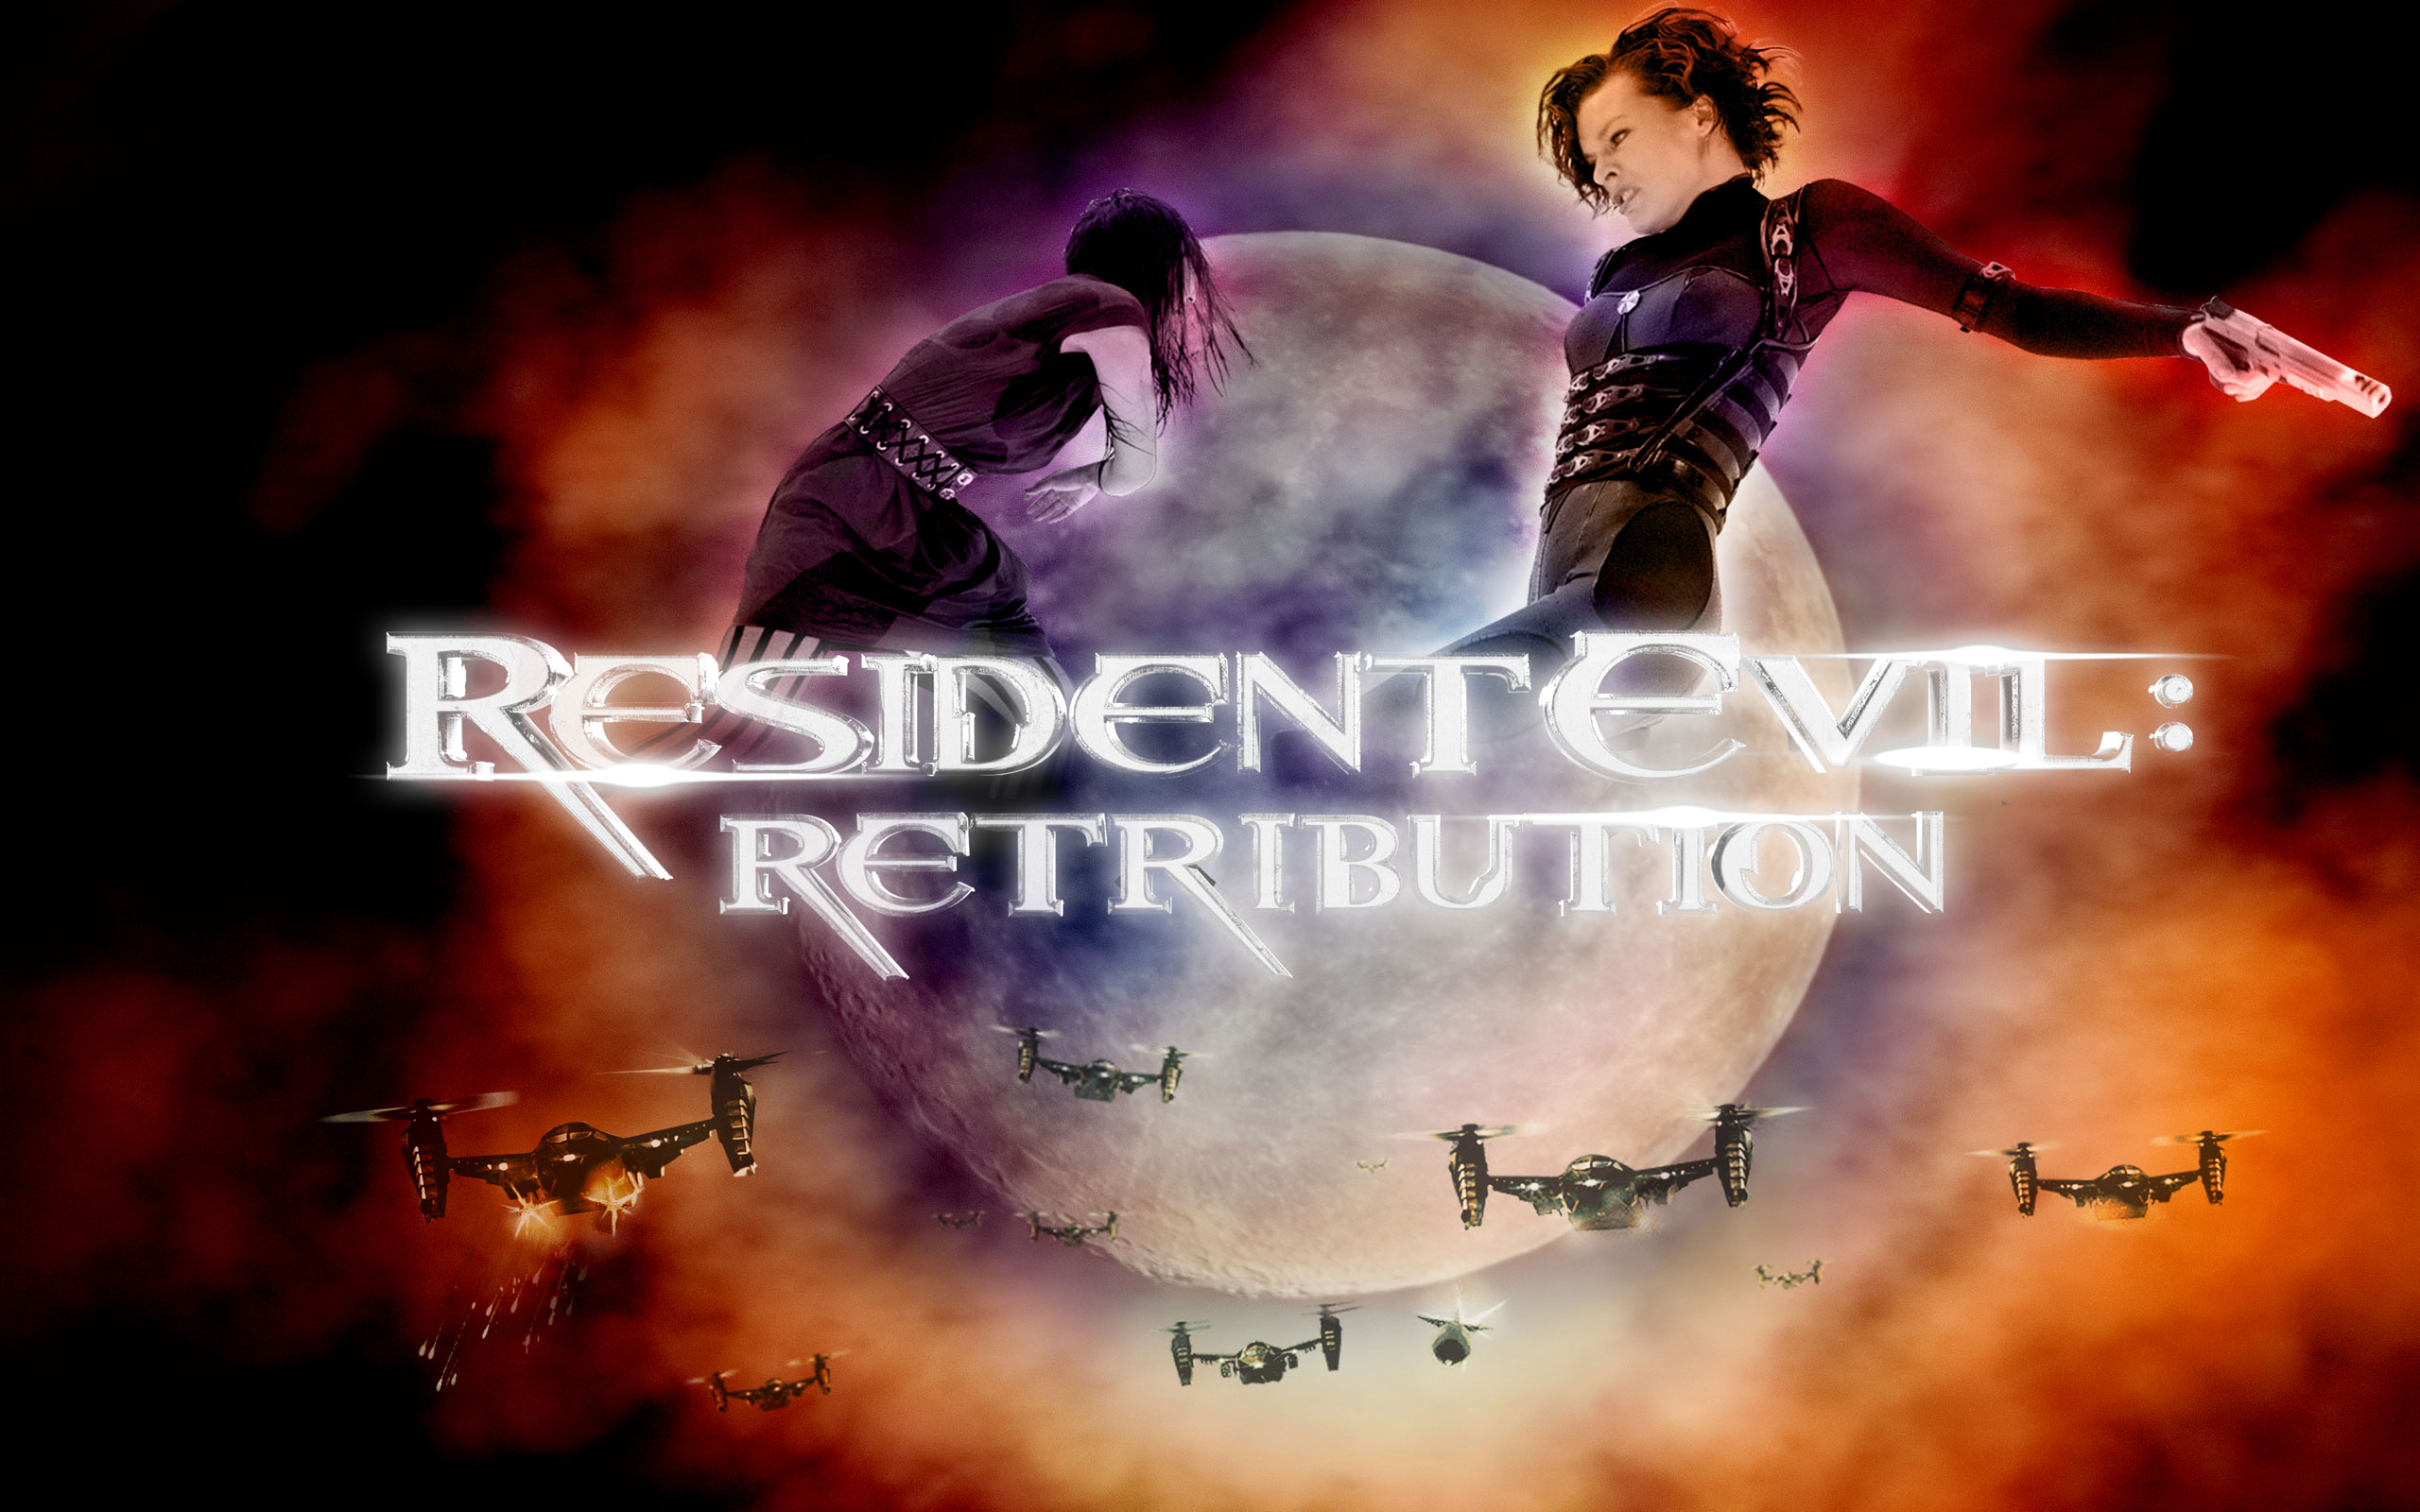 Descarga gratuita de fondo de pantalla para móvil de Resident Evil, Resident Evil 5: La Venganza, Residente Demoníaco, Películas.